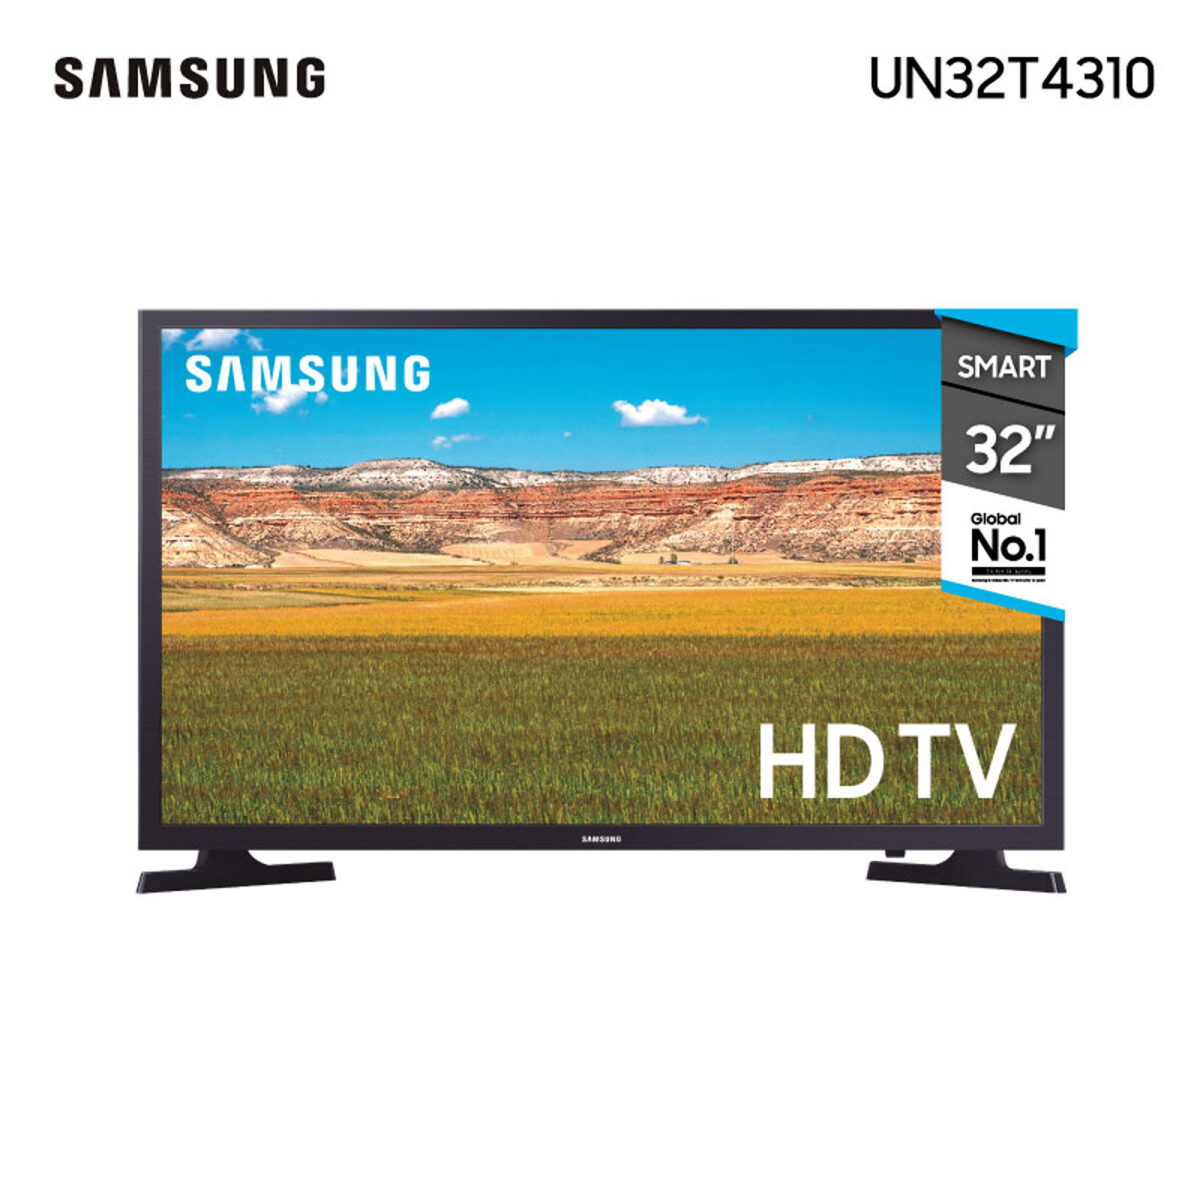 SMART TV SAMSUNG - CERAMICA NEGRO UN32T4310 